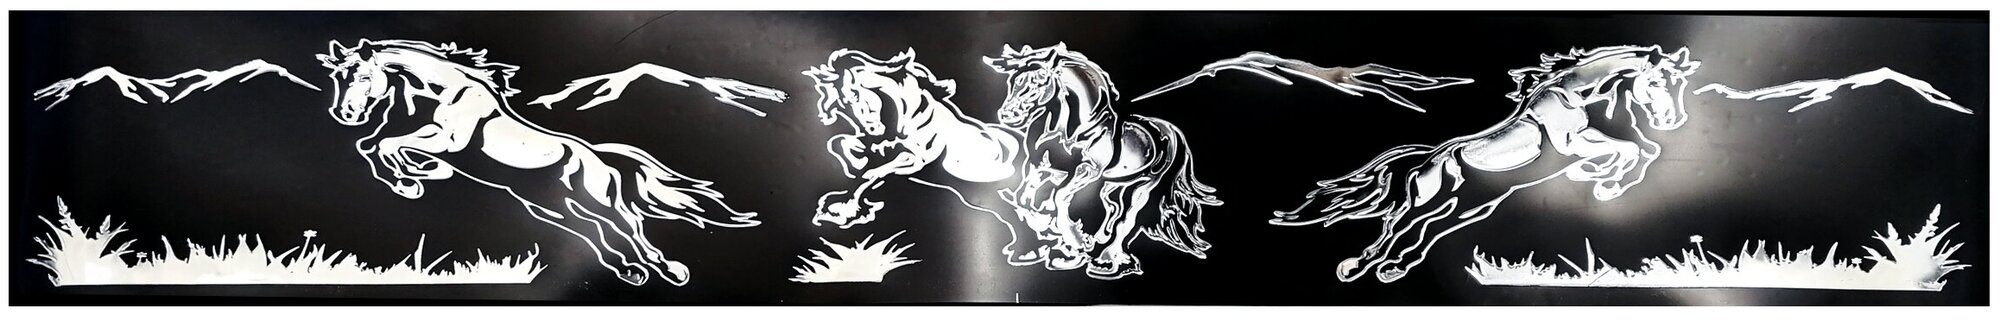 Брызговик Газель длинномер 200*30 (рисунок кони), толщина 3 мм